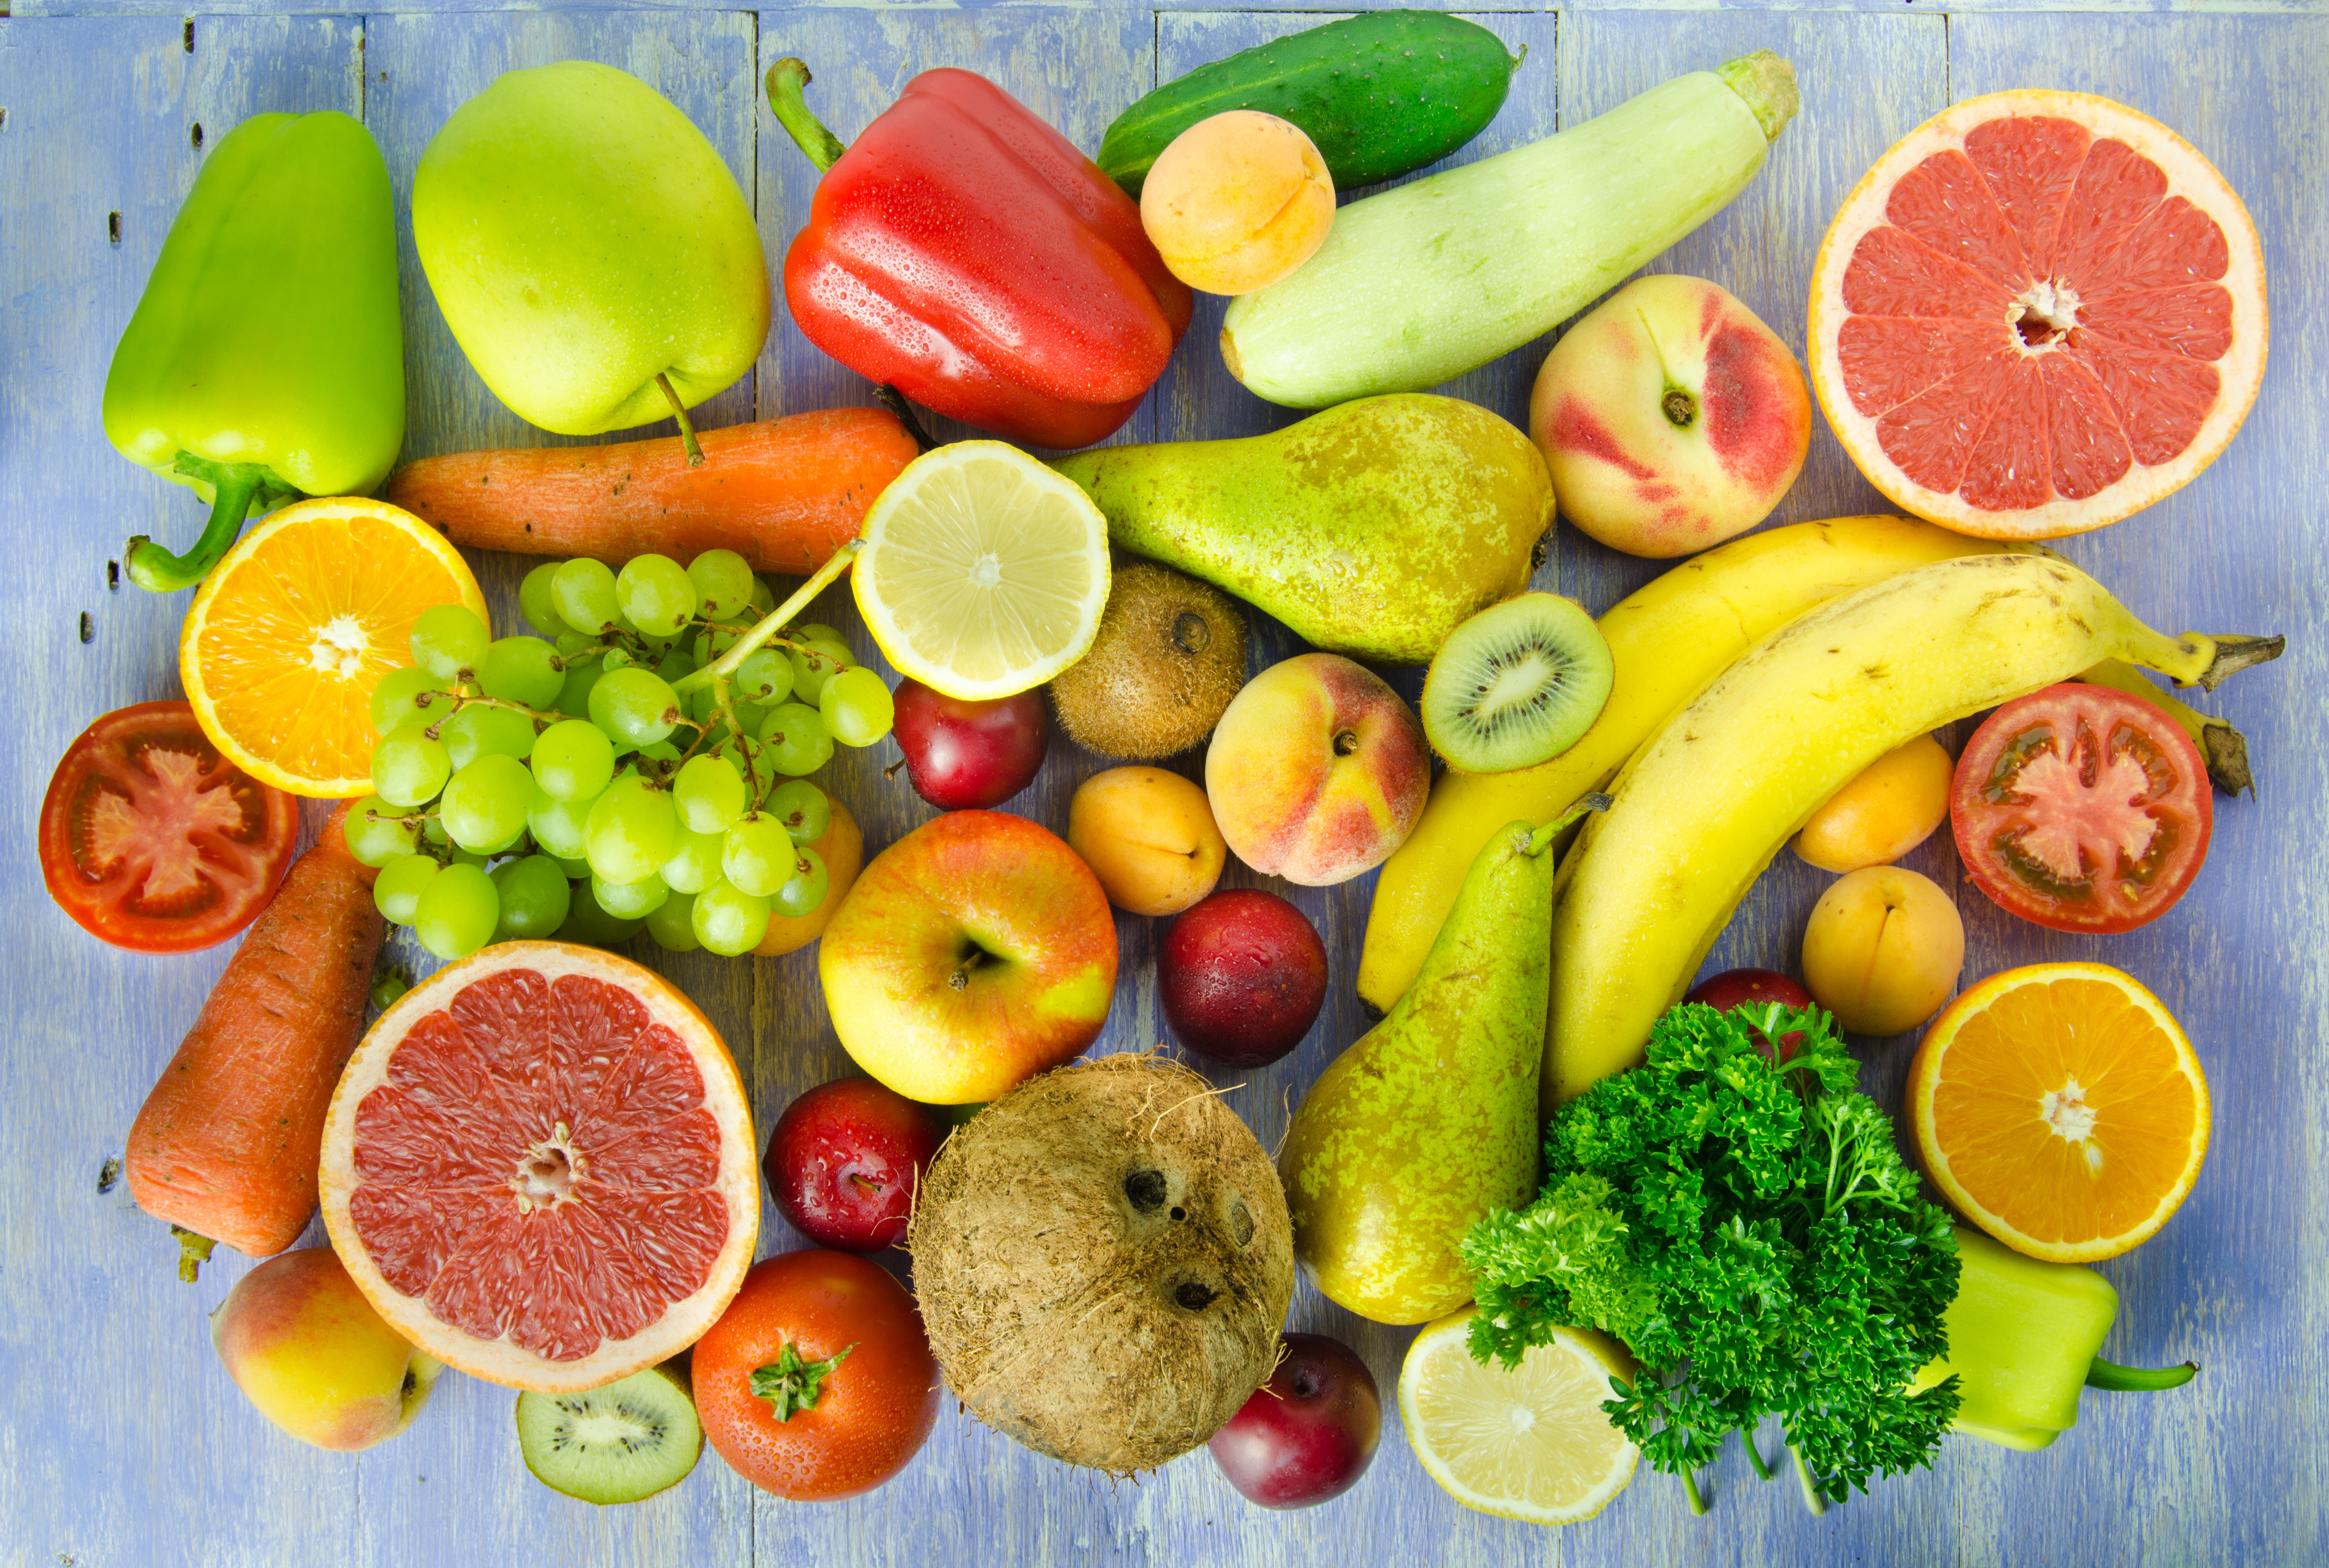 Плоды овощей и фруктов. Овощи и фрукты. Овощи, фрукты, ягоды. Obishi i frukti. Овощи b ahernb.